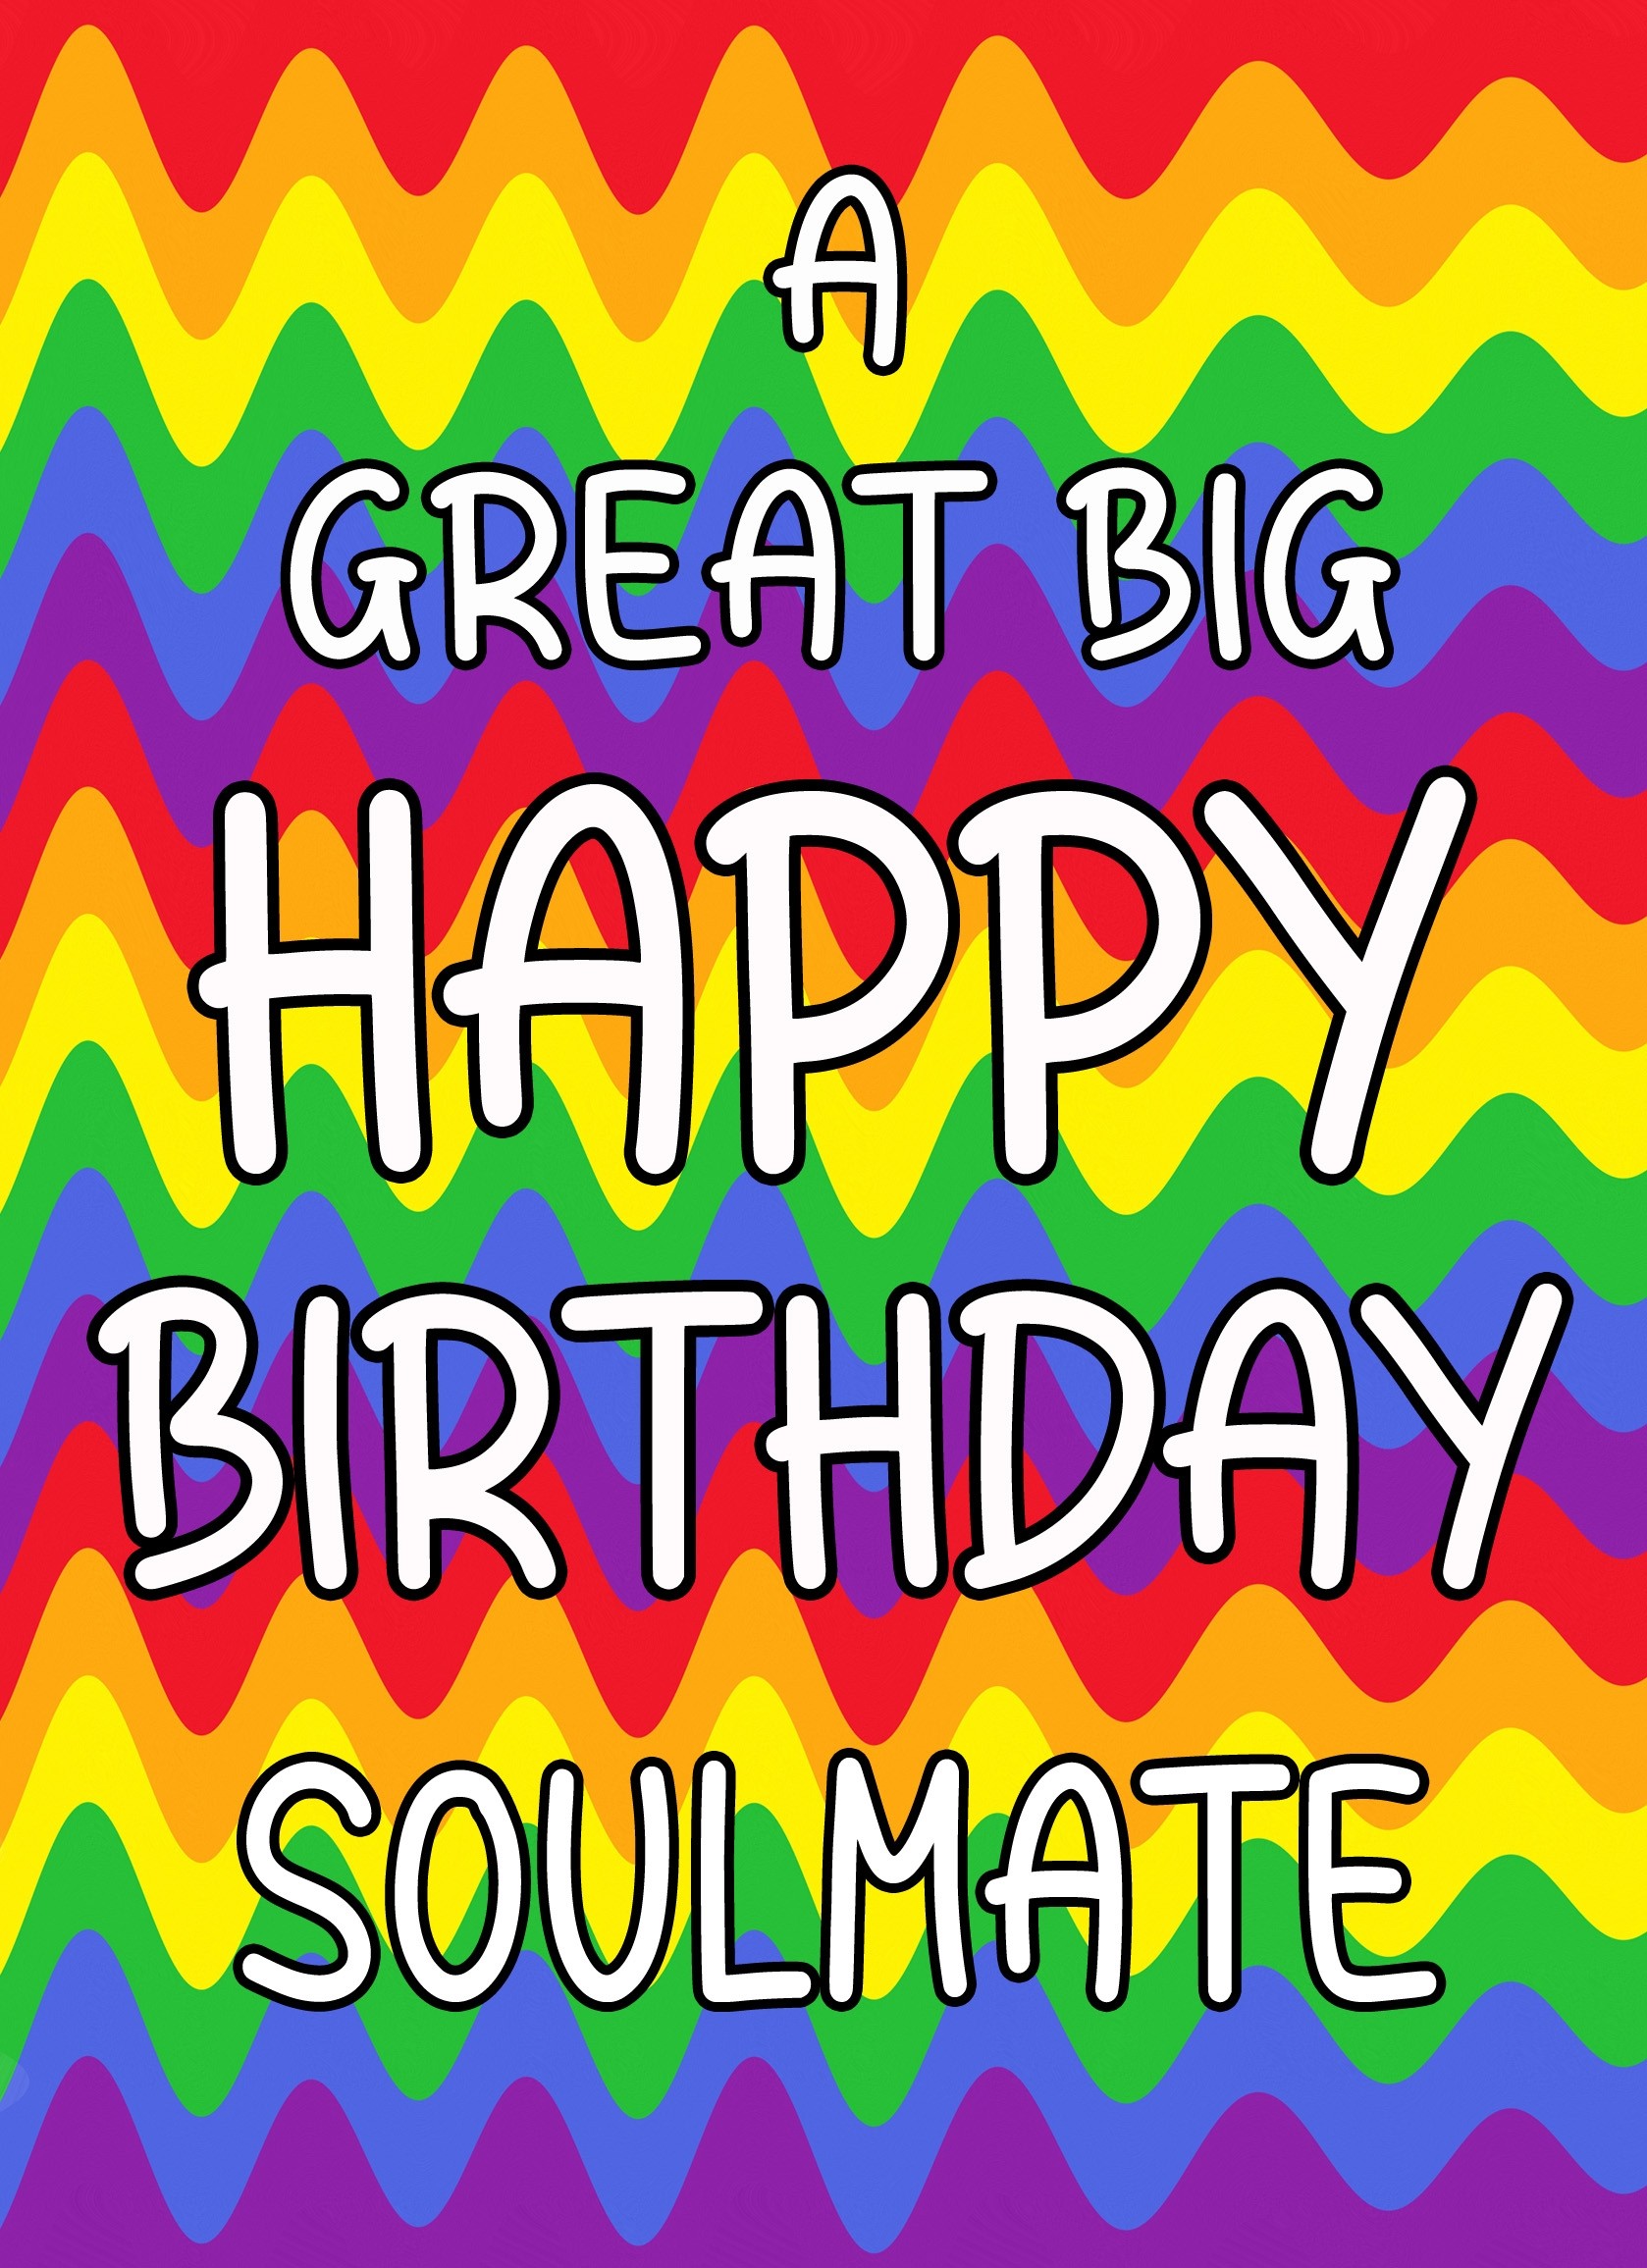 Happy Birthday 'Soulmate' Greeting Card (Rainbow)